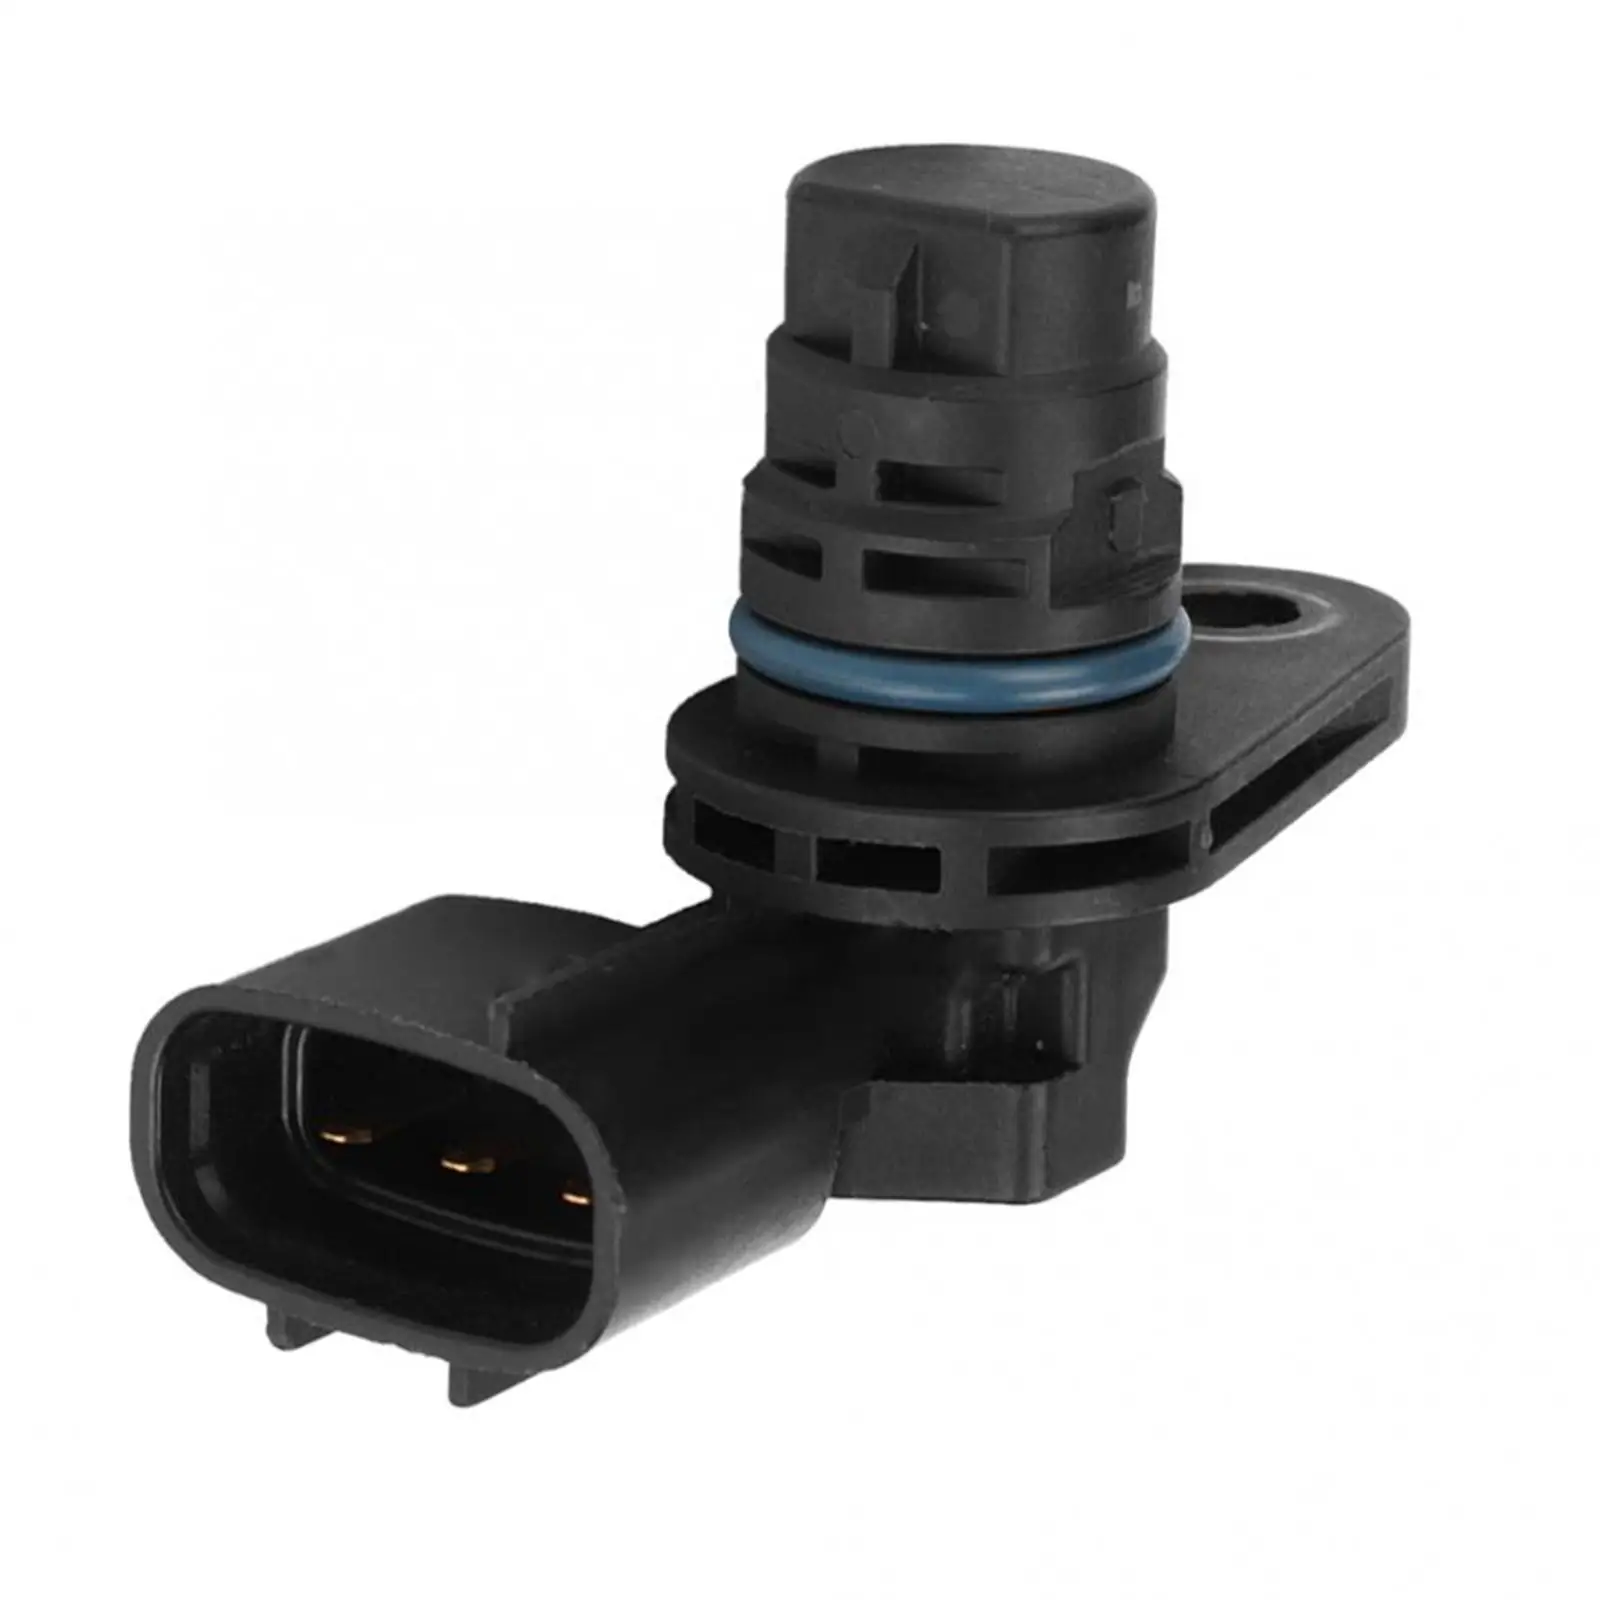 Car Camshaft Position Sensor Replacement Accessory Fits for  Sonata 2006-2014 39350-250.0L 2.4L